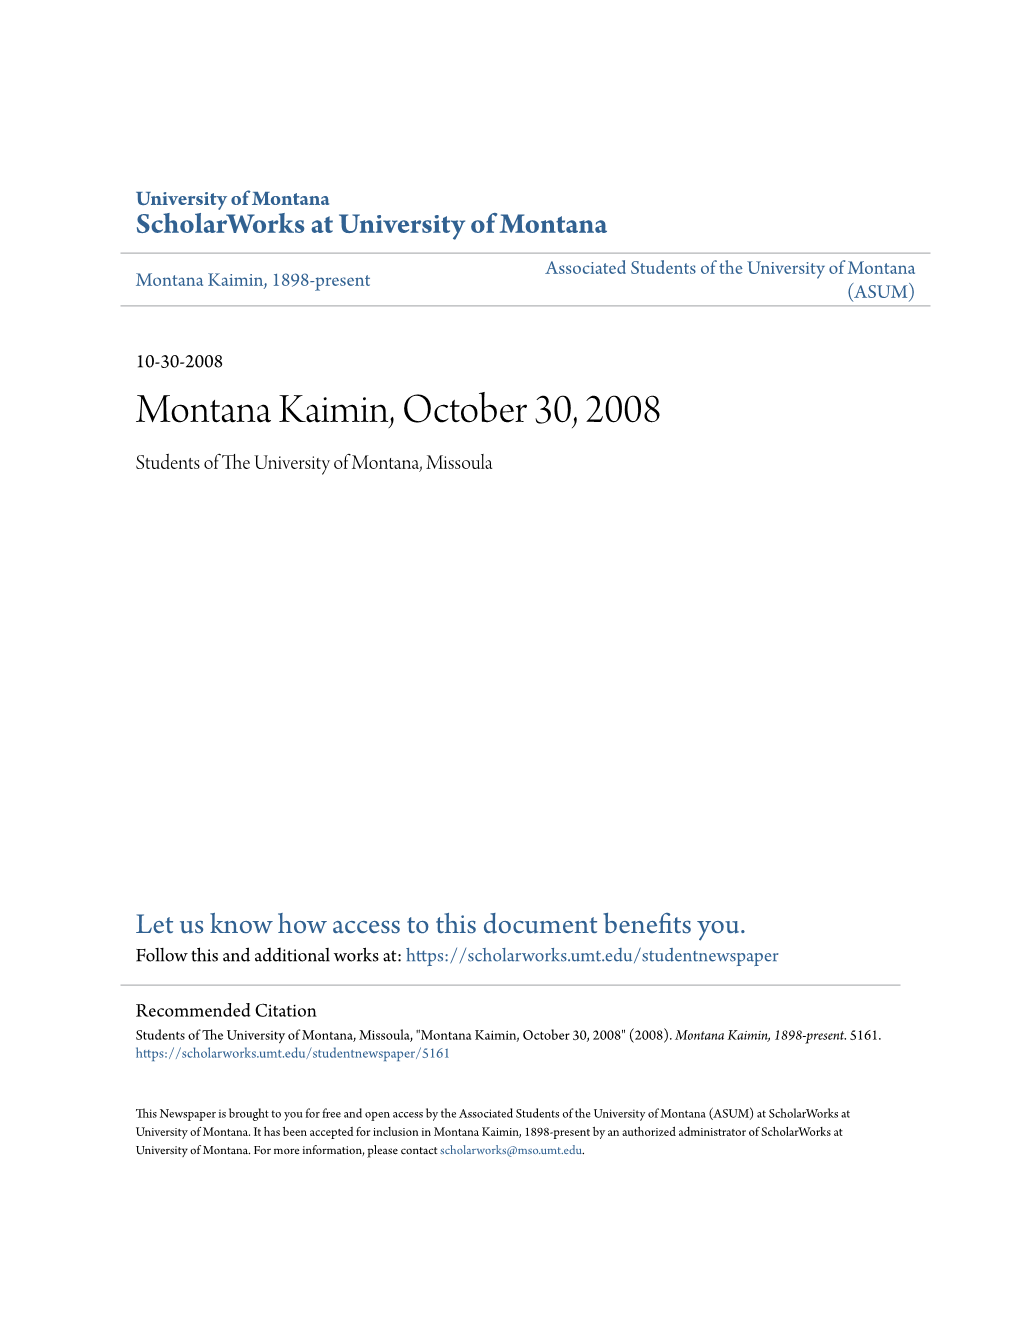 Montana Kaimin, October 30, 2008 Students of the Niu Versity of Montana, Missoula